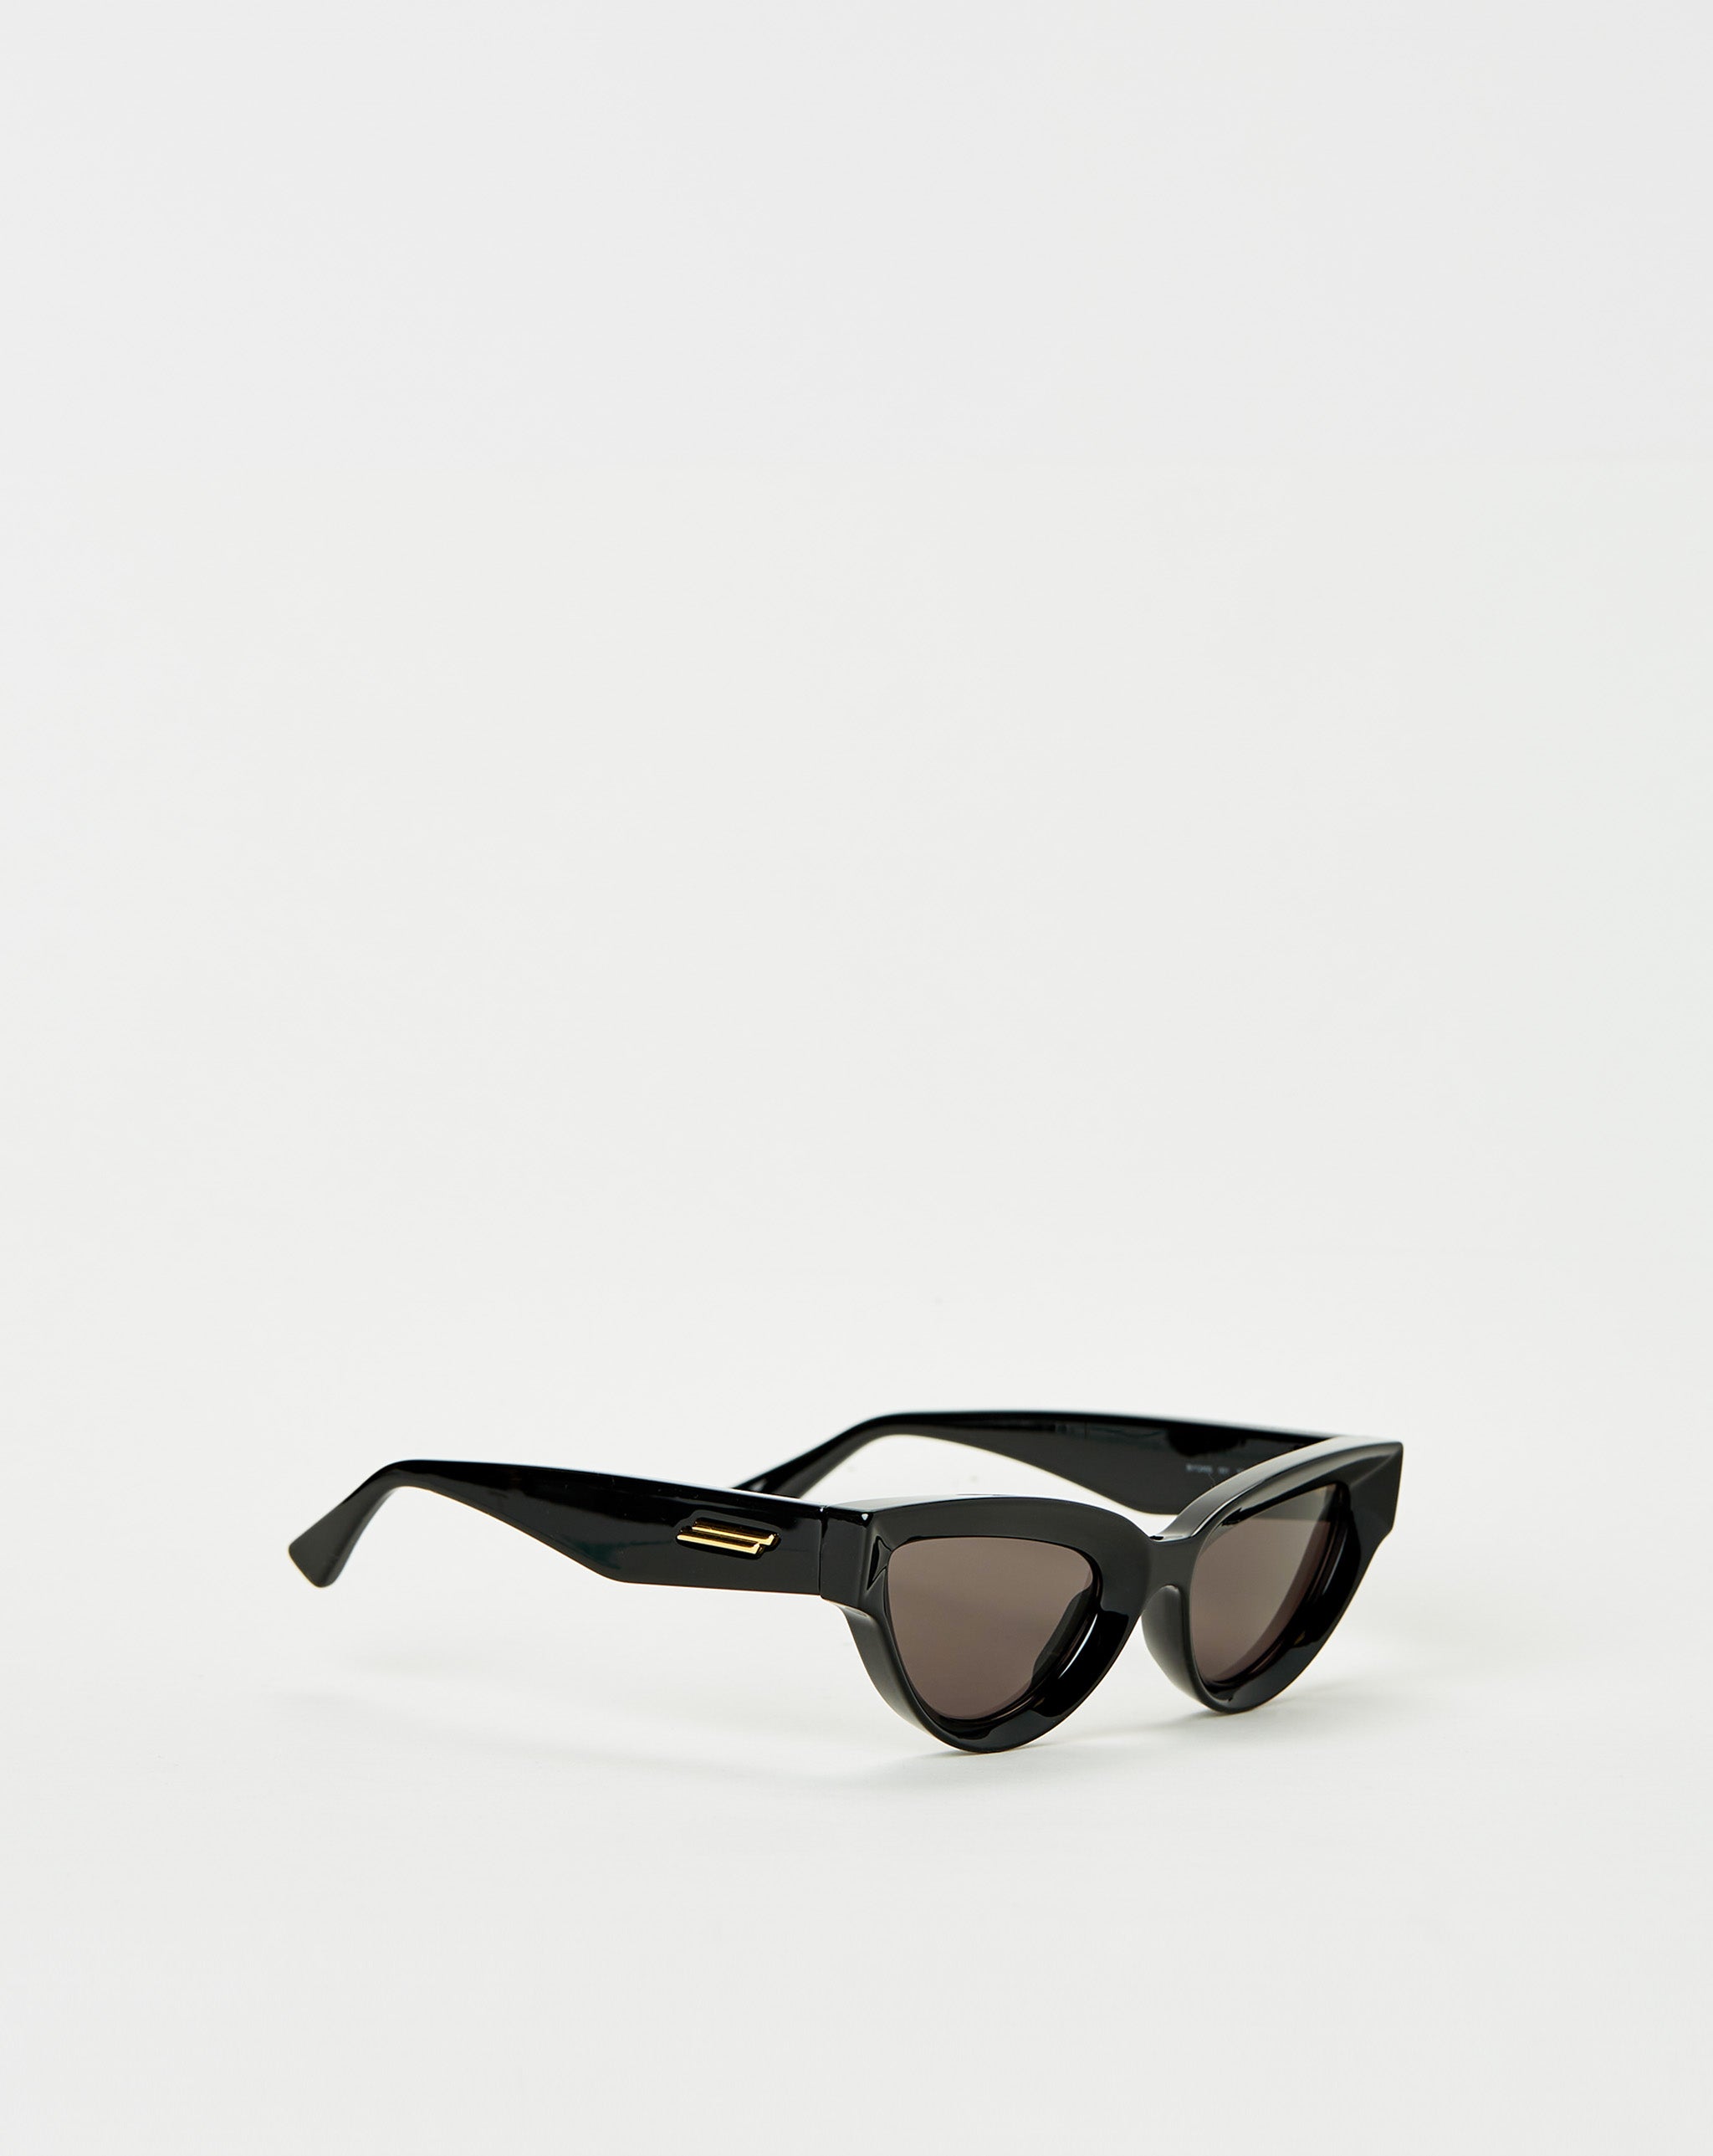 Bottega Veneta porter x oliver peoples folding sunglasses  - Cheap Cerbe Jordan outlet